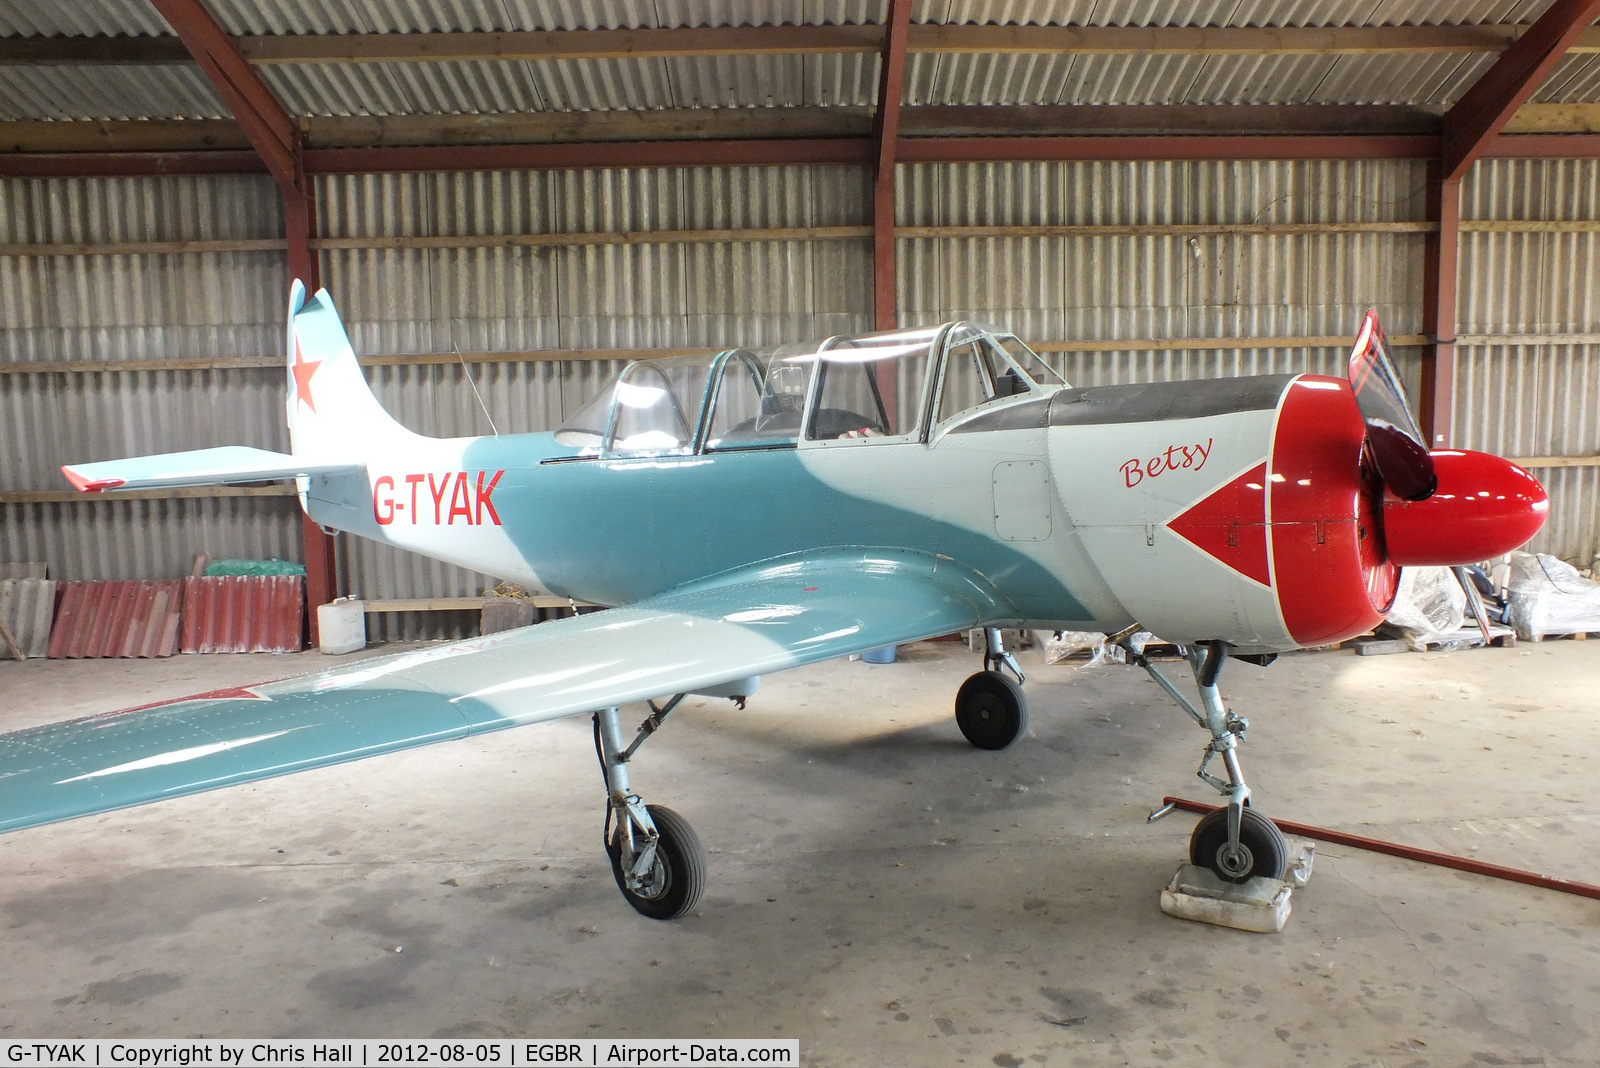 G-TYAK, 1989 Bacau Yak-52 C/N 899907, The Real Aeroplane Club's Summer Madness Fly-In, Breighton